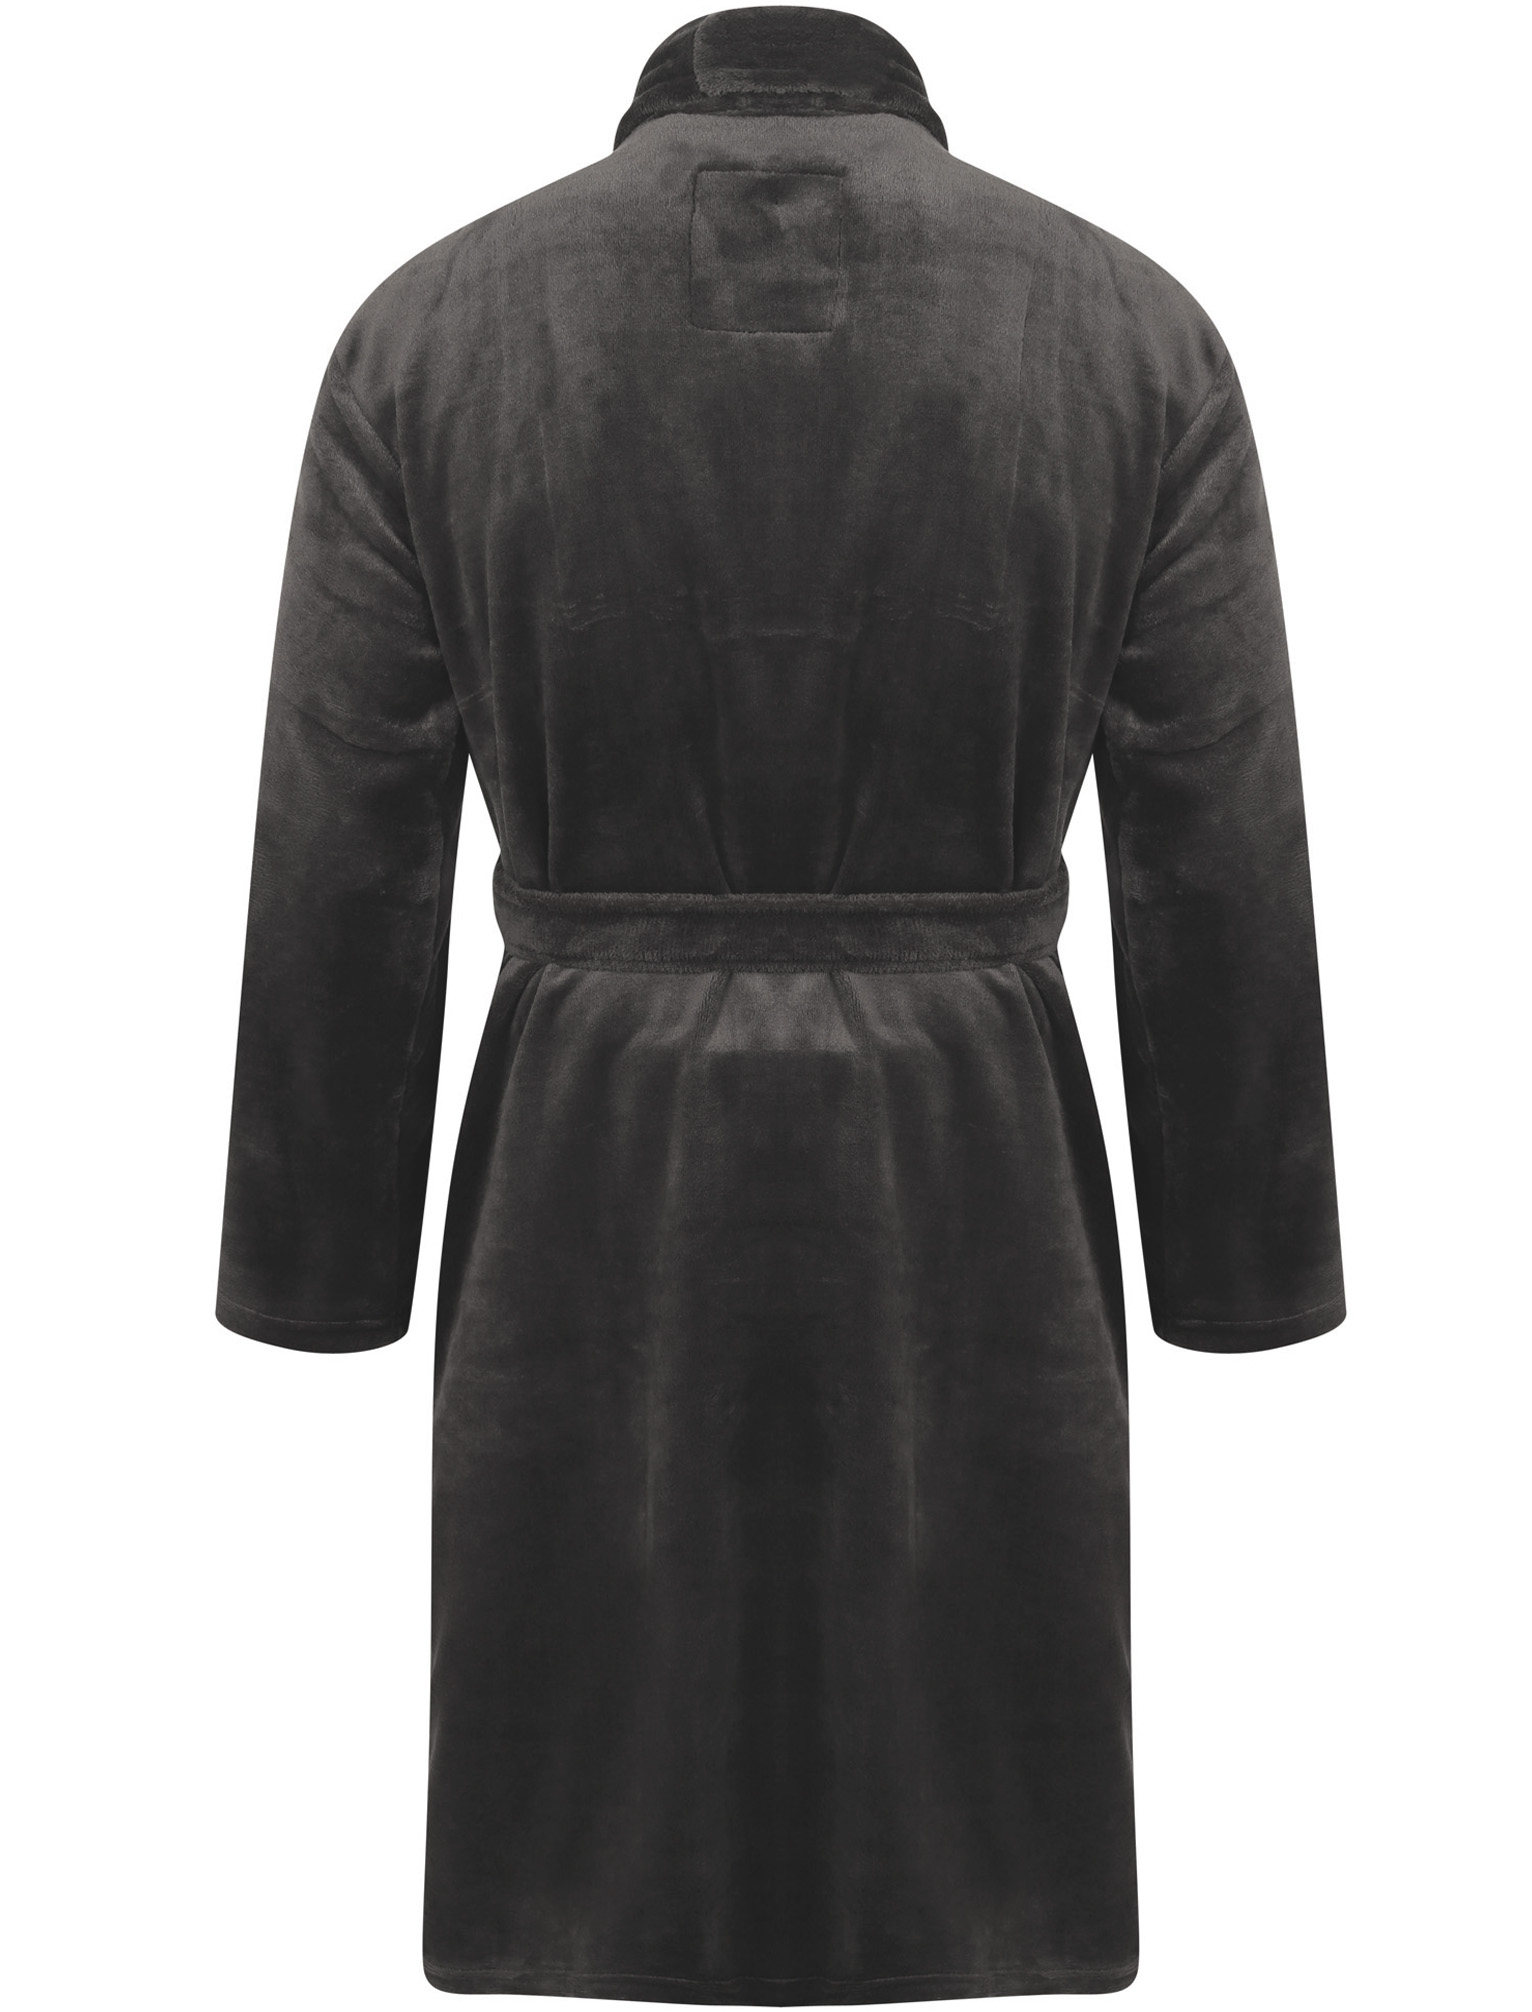 Tokyo Laundry Men's Dressing Gown Soft Luxury Fleece Tie Waist Bath Robe Thick